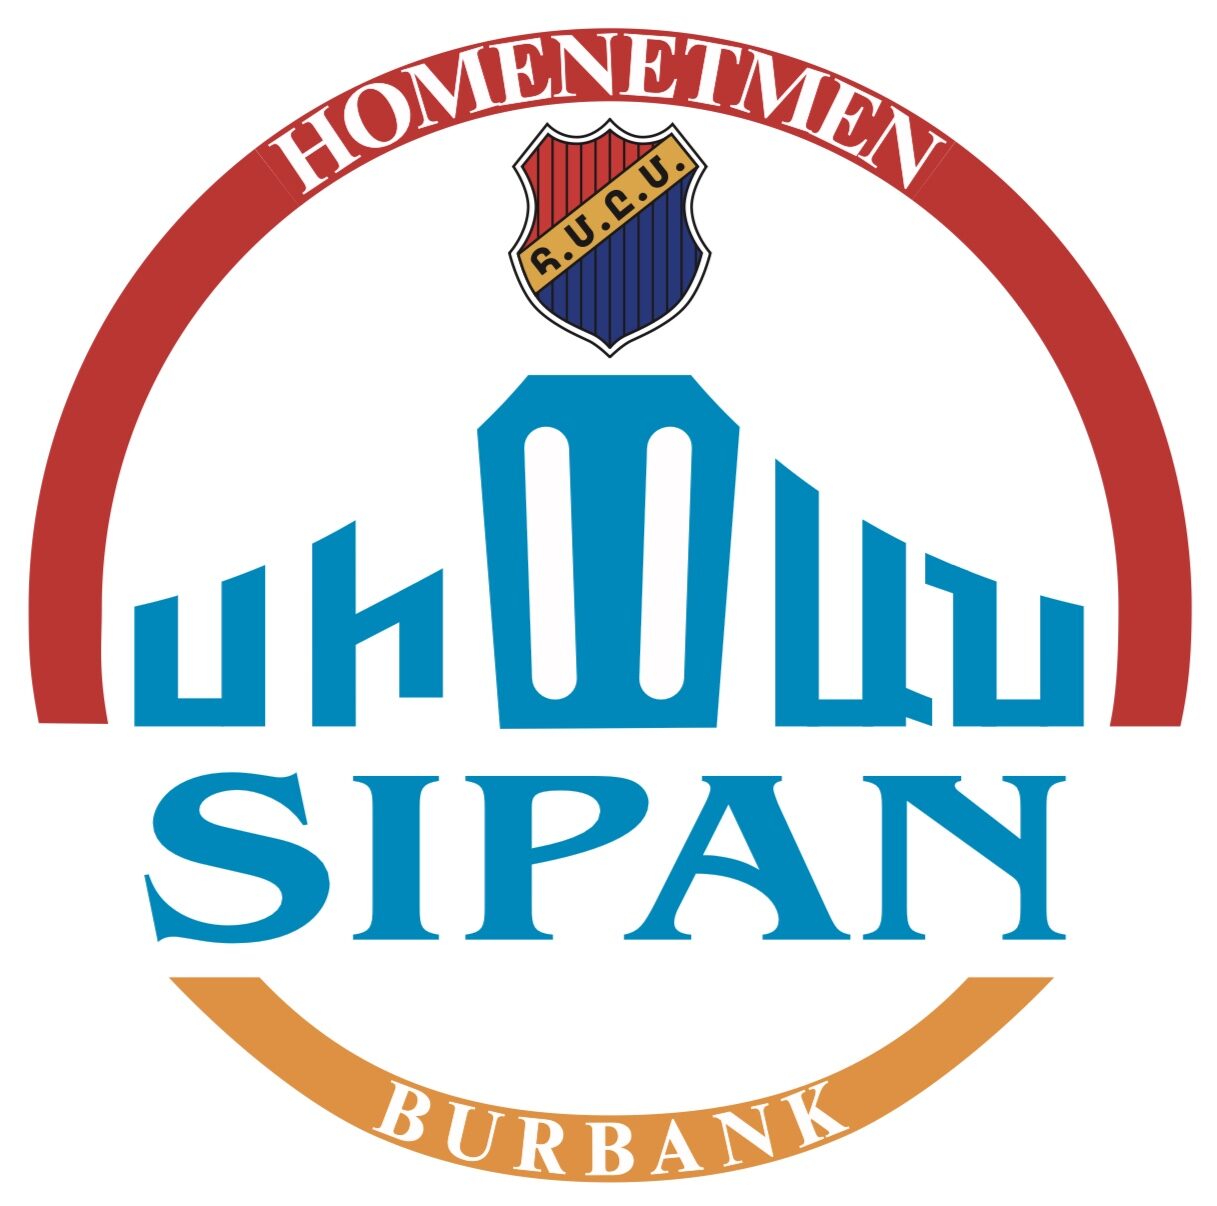 Homenetmen Burbank ‘Sipan’ Chapter